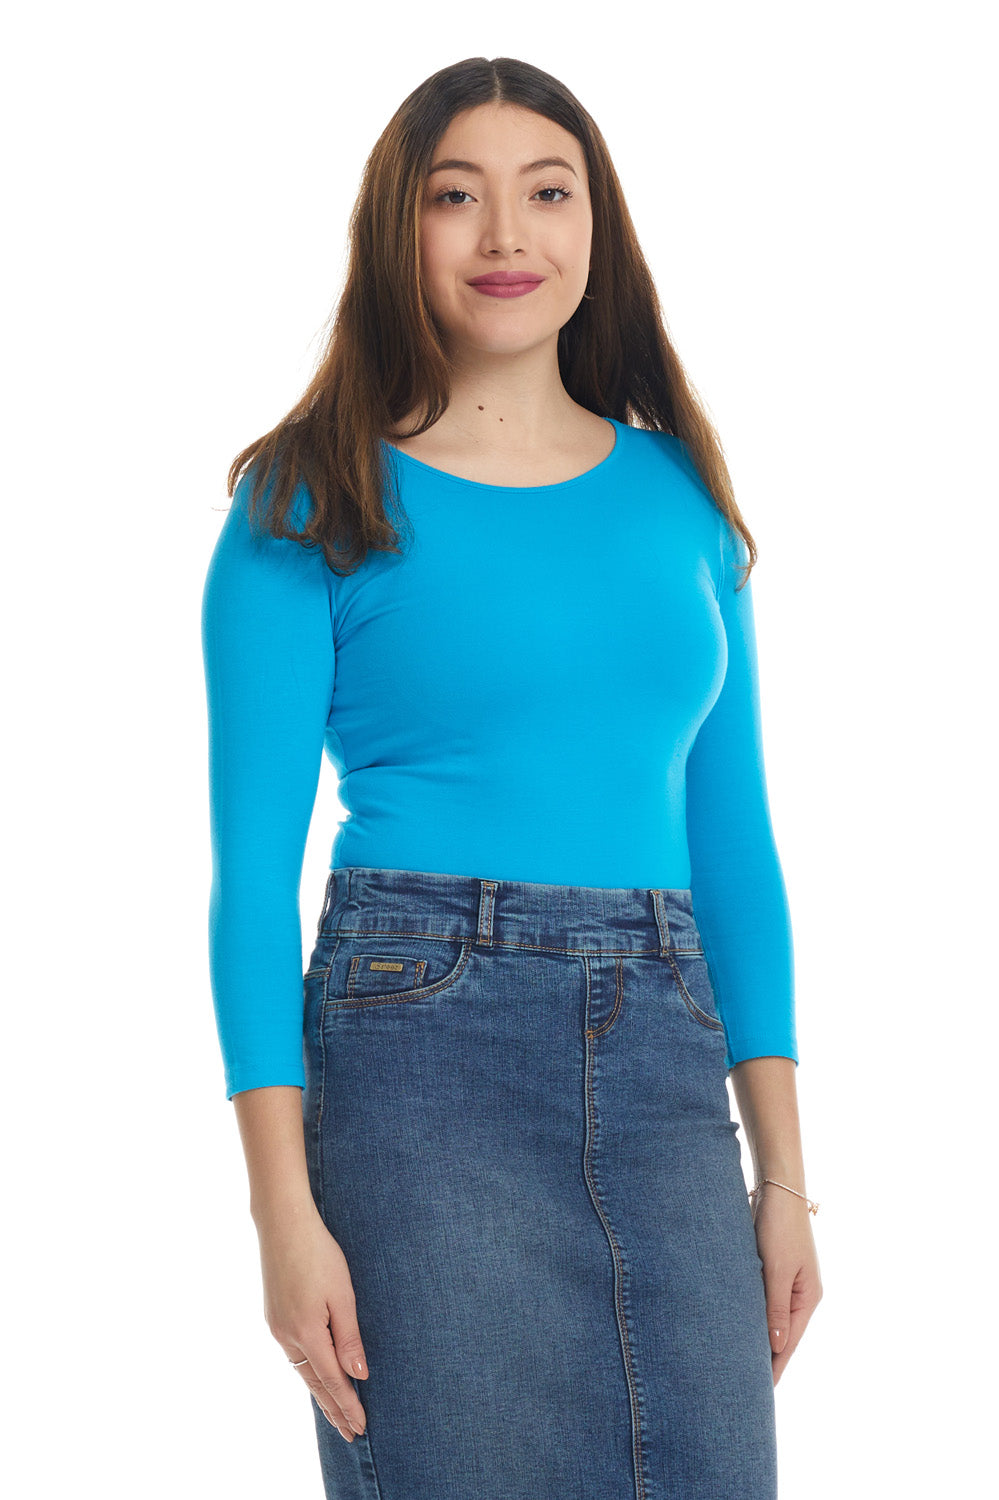 modest blue 3/4 sleeve cotton boat neck t-shirt top